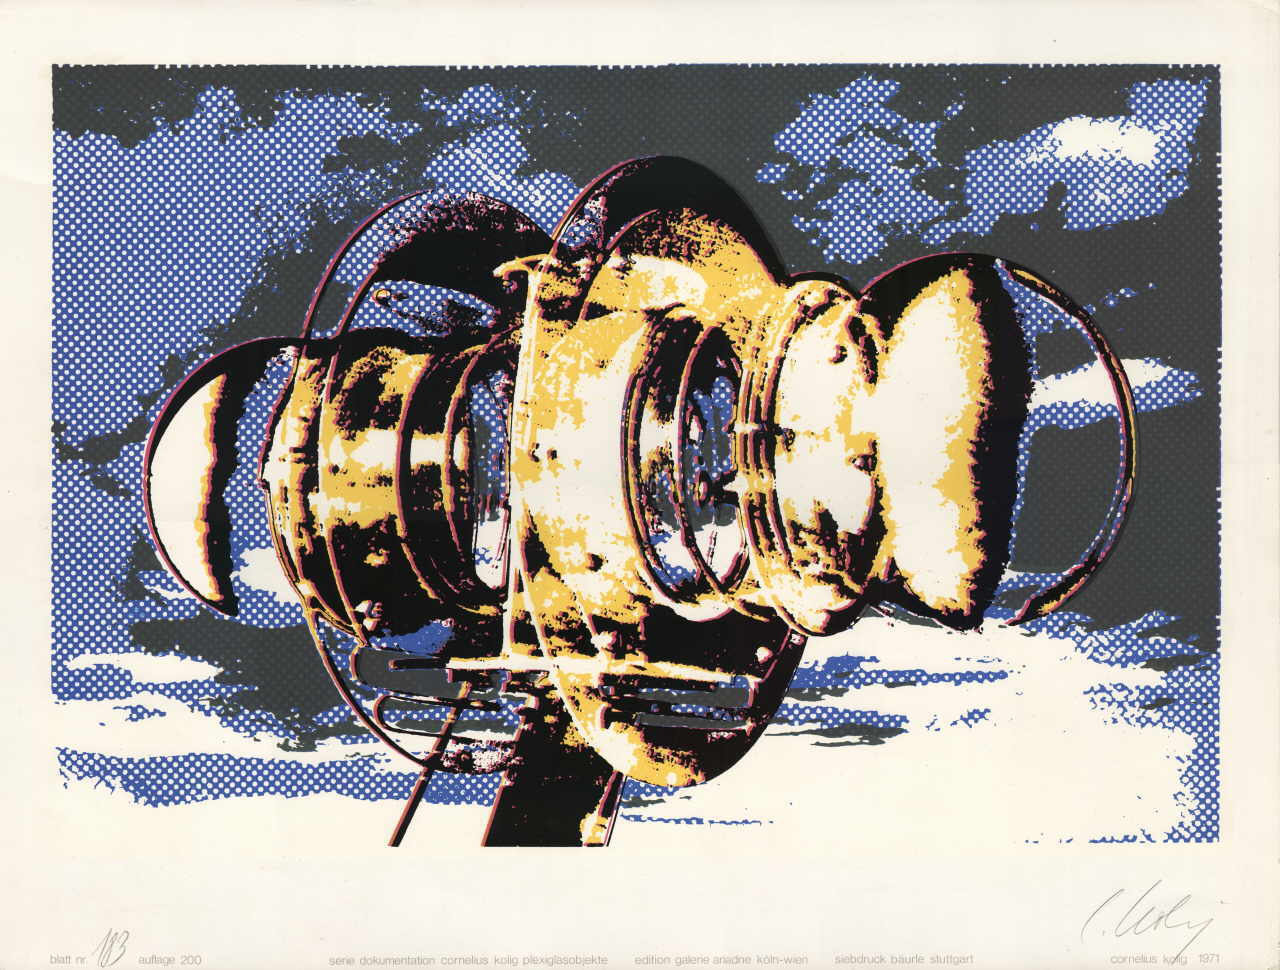 Kolig Cornelius 
Serie "Dokumentation Cornelius Kolig Plexiglasobjekte", 1971
Siebdruck
Papiergröße 50 x 65 cm